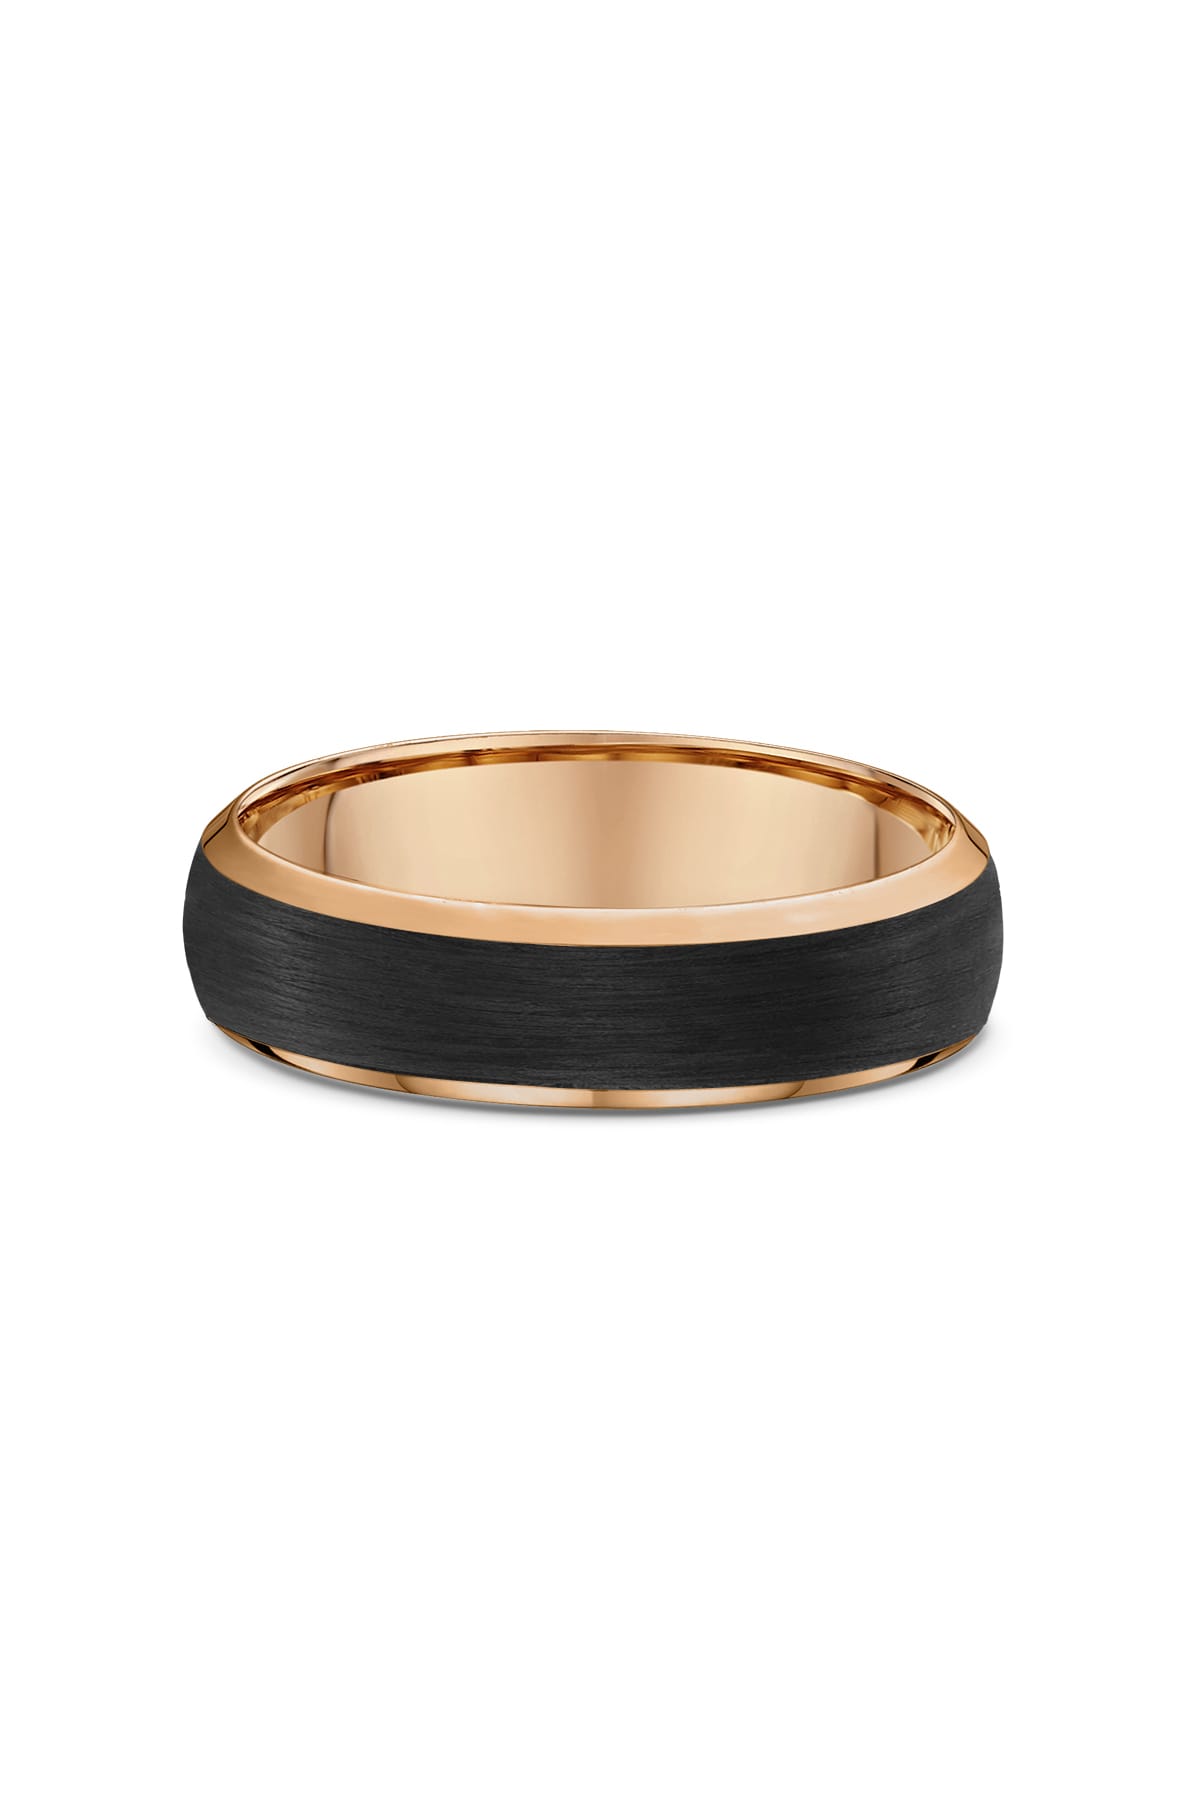 Men's Carbon Fibre Wedding Ring available at LeGassick Diamonds and Jewellery Gold Coast, Australia.